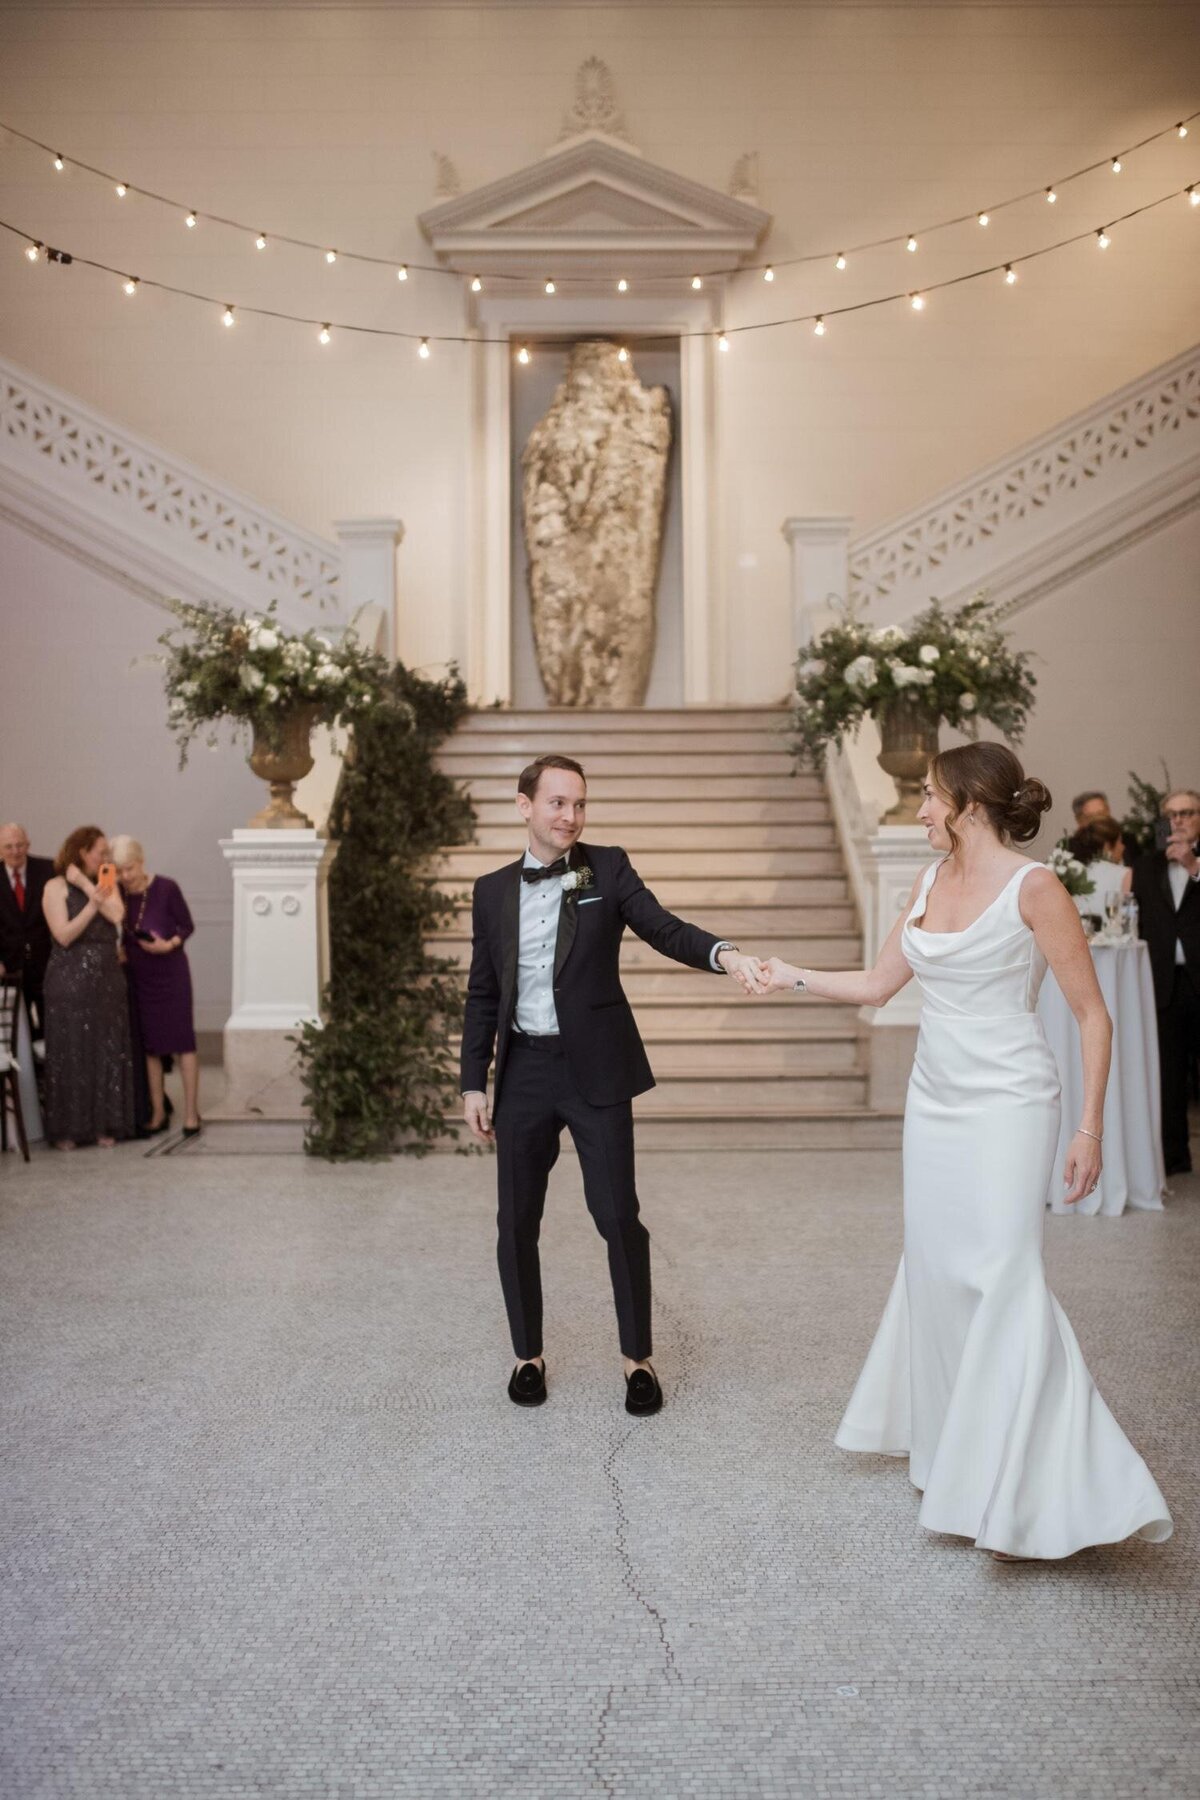 Bride-and-Groom-first-dance-New-Orleans-Museum-of-Art-Wedding-NOMA-groom-spins-bride-.jpg